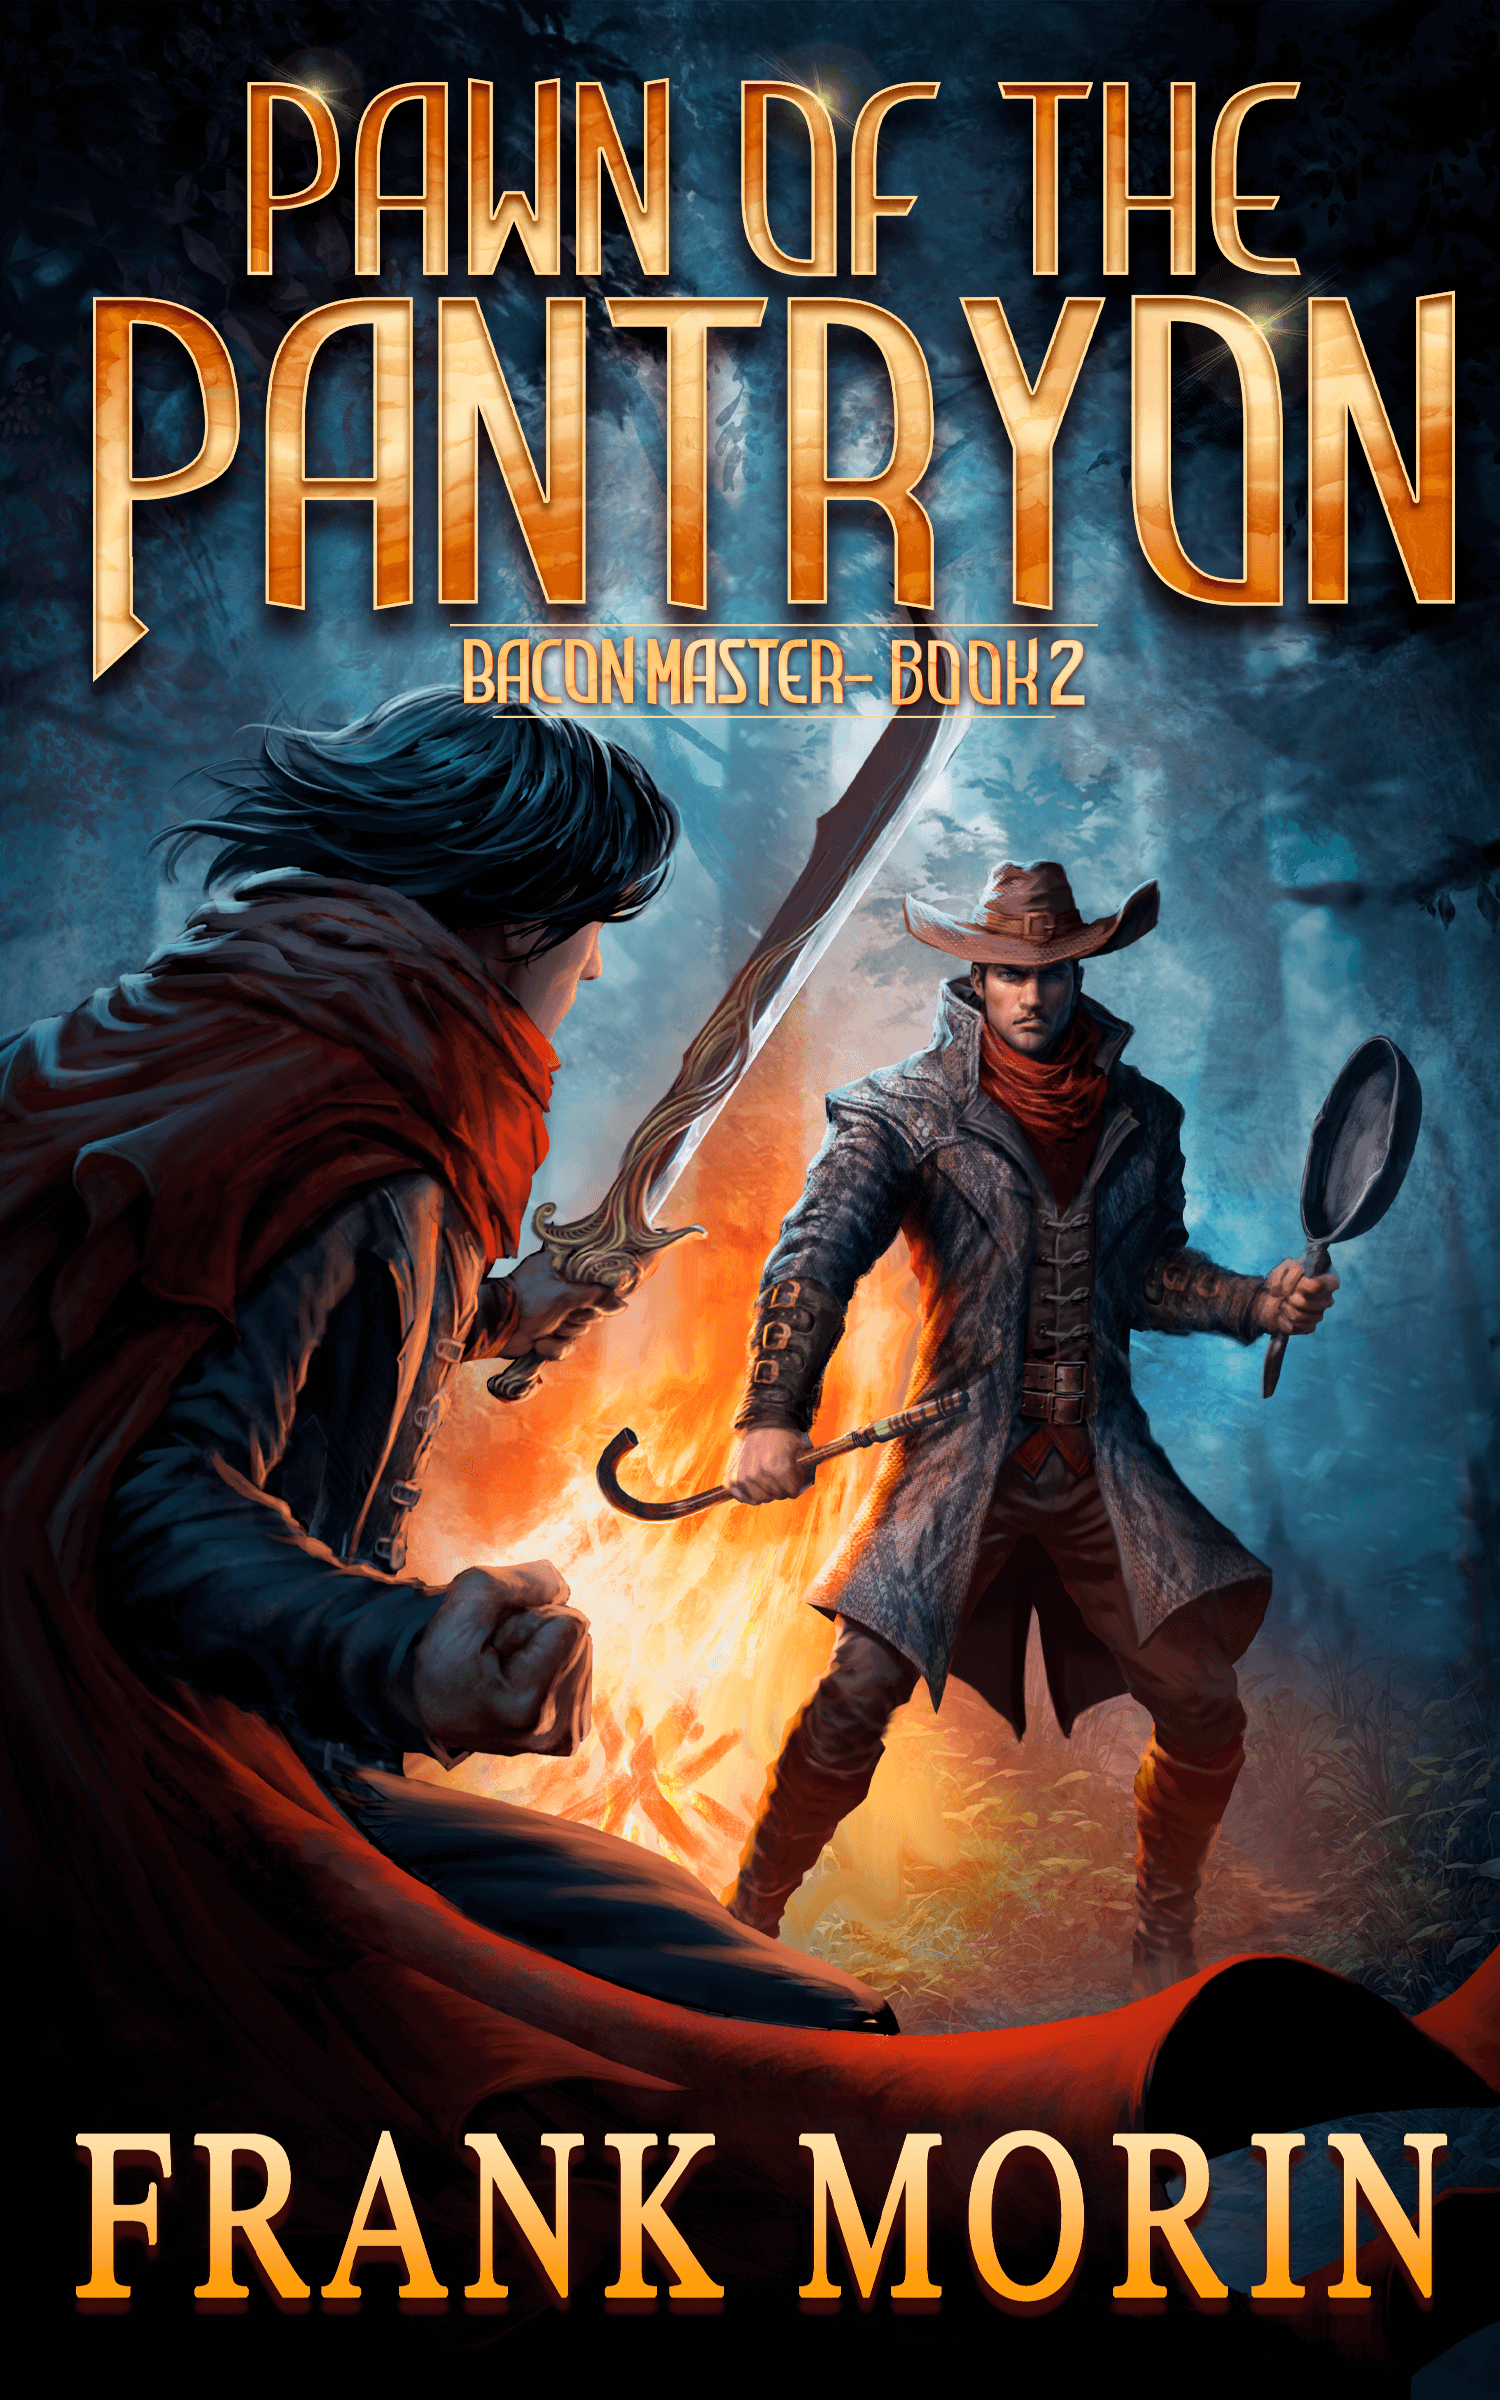 Pawn of the Pantryon